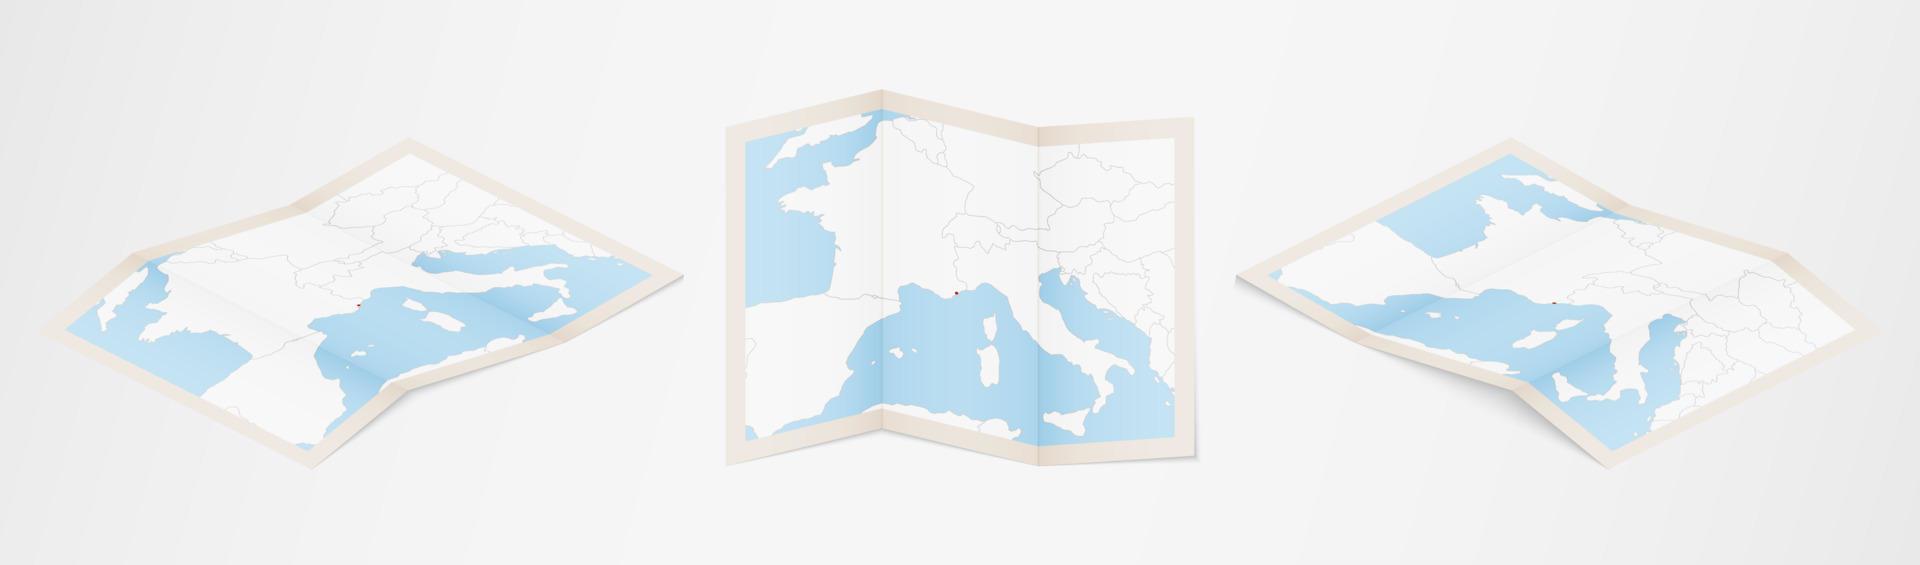 vikta Karta av Monaco i tre annorlunda versioner. vektor